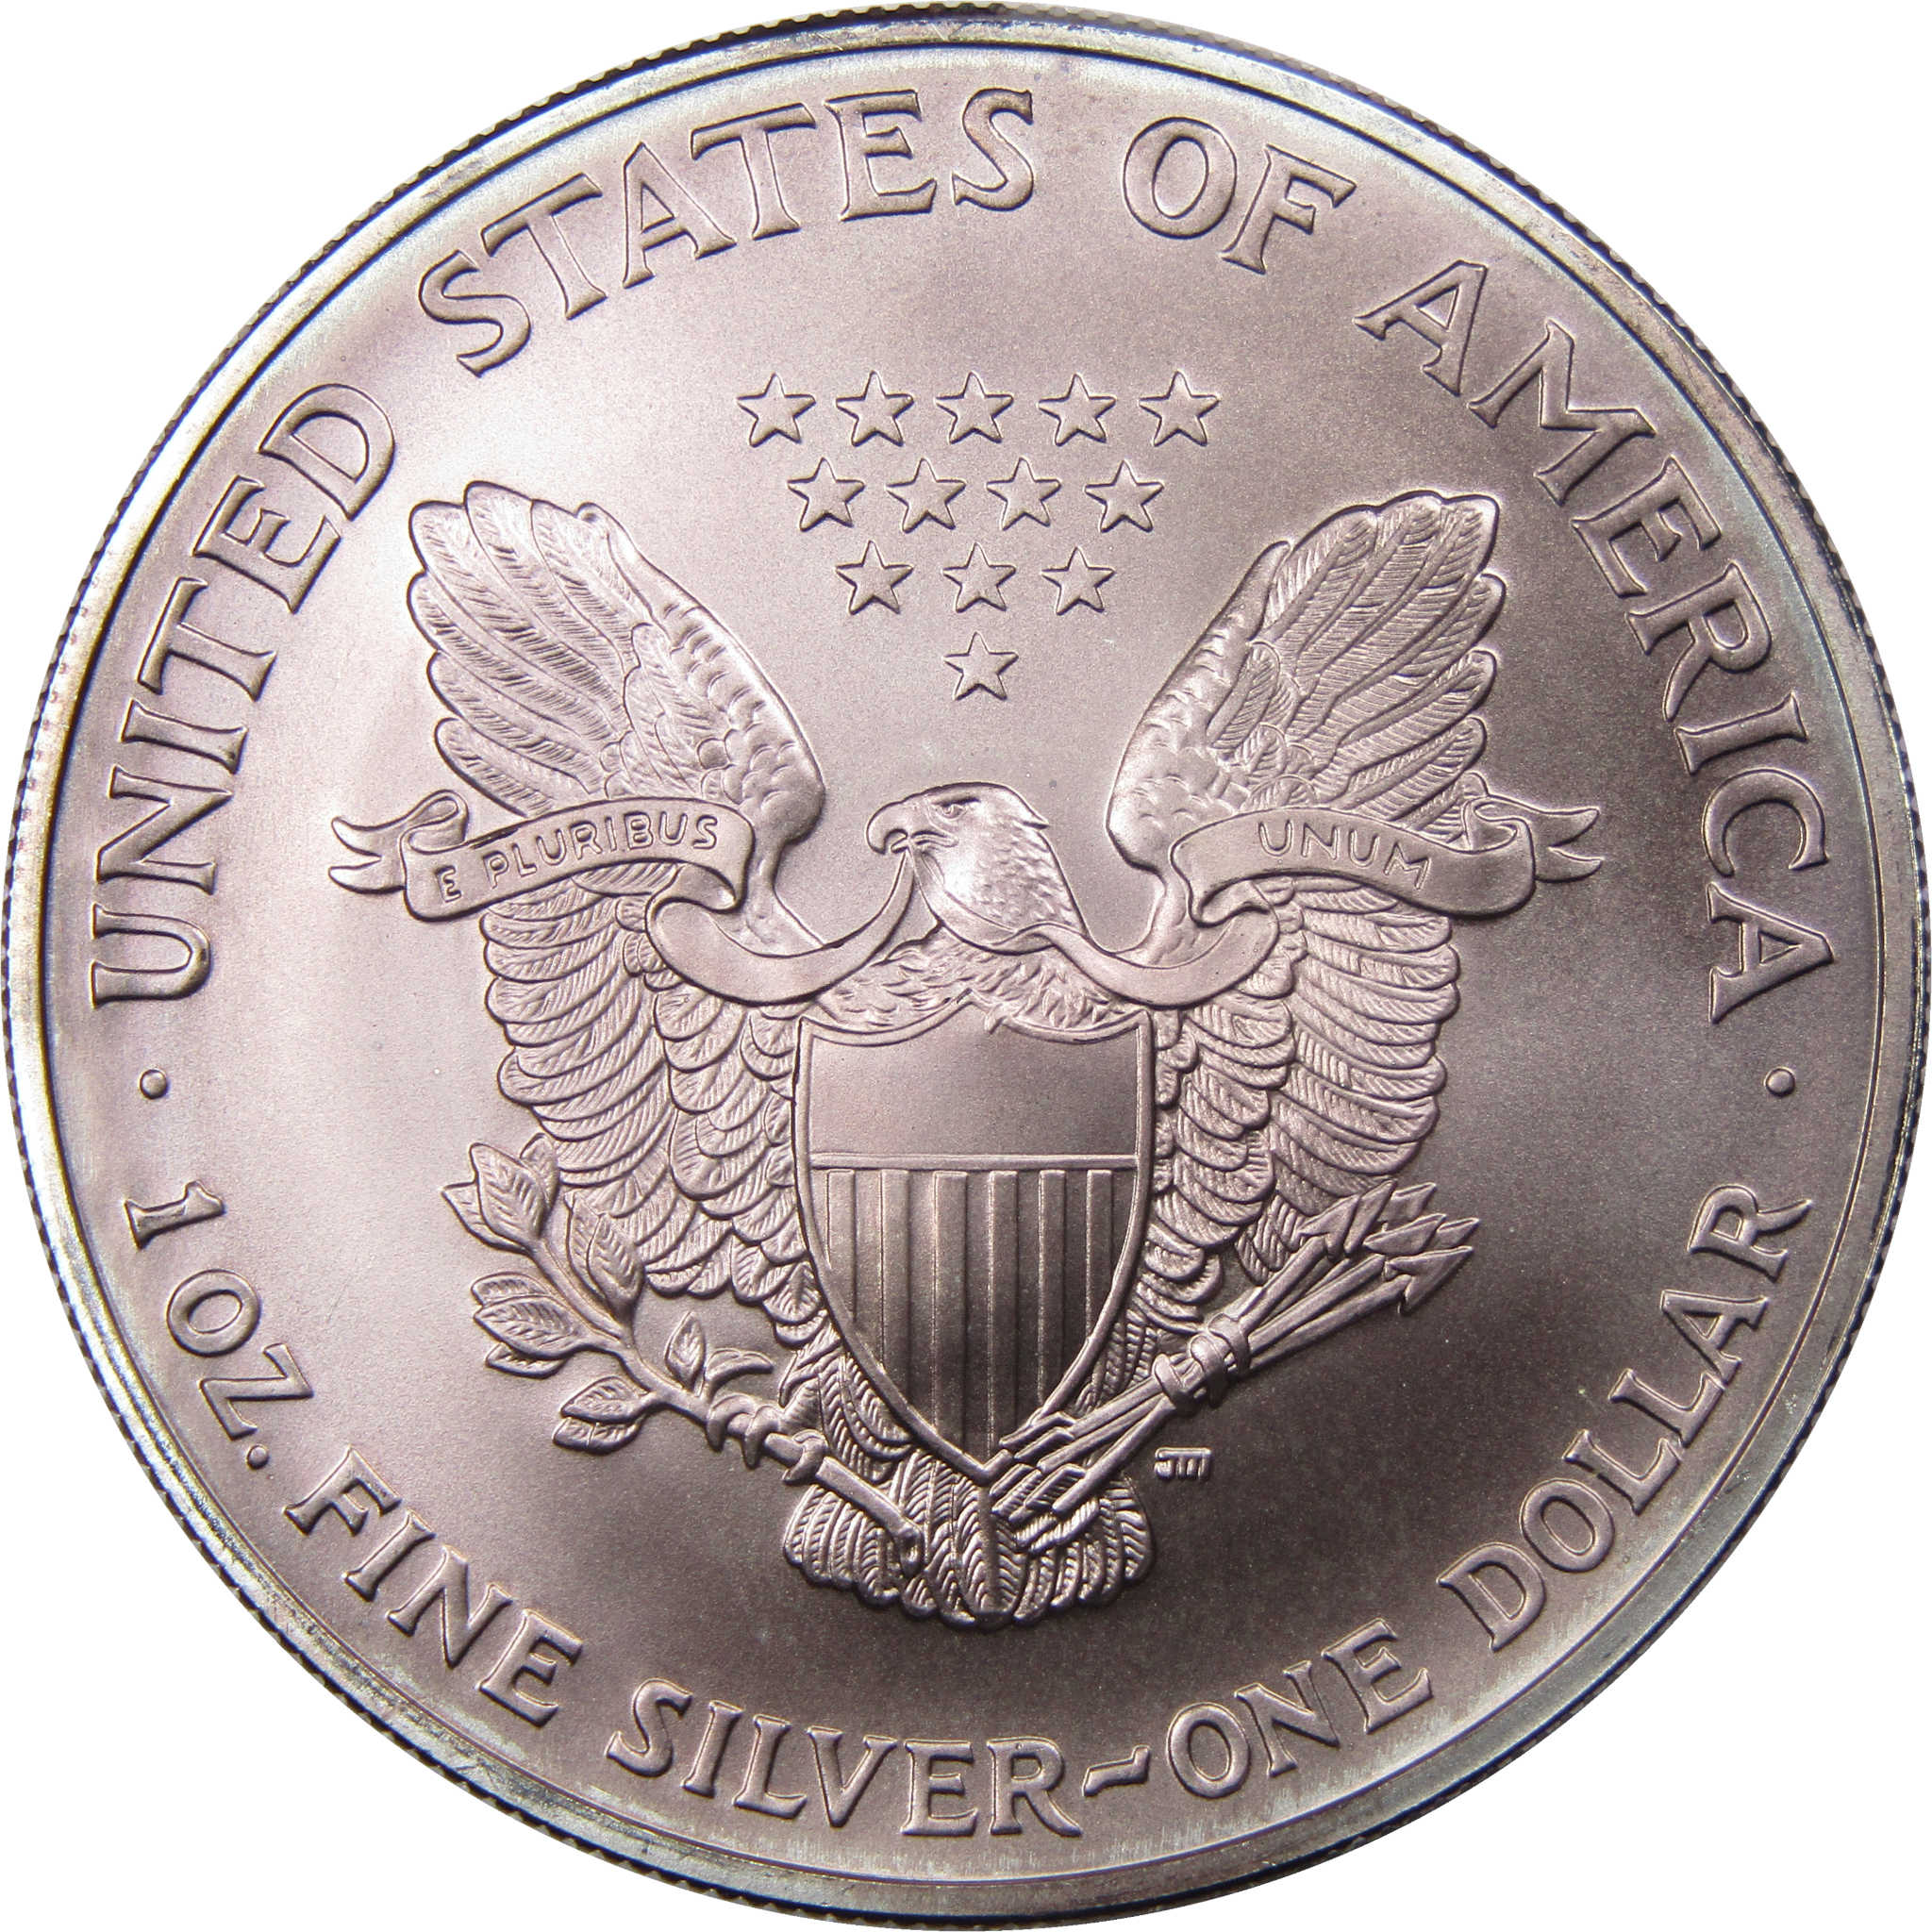 2004 American Eagle Dollar 1 oz Fine Silver Bullion Toned SKU:I1606